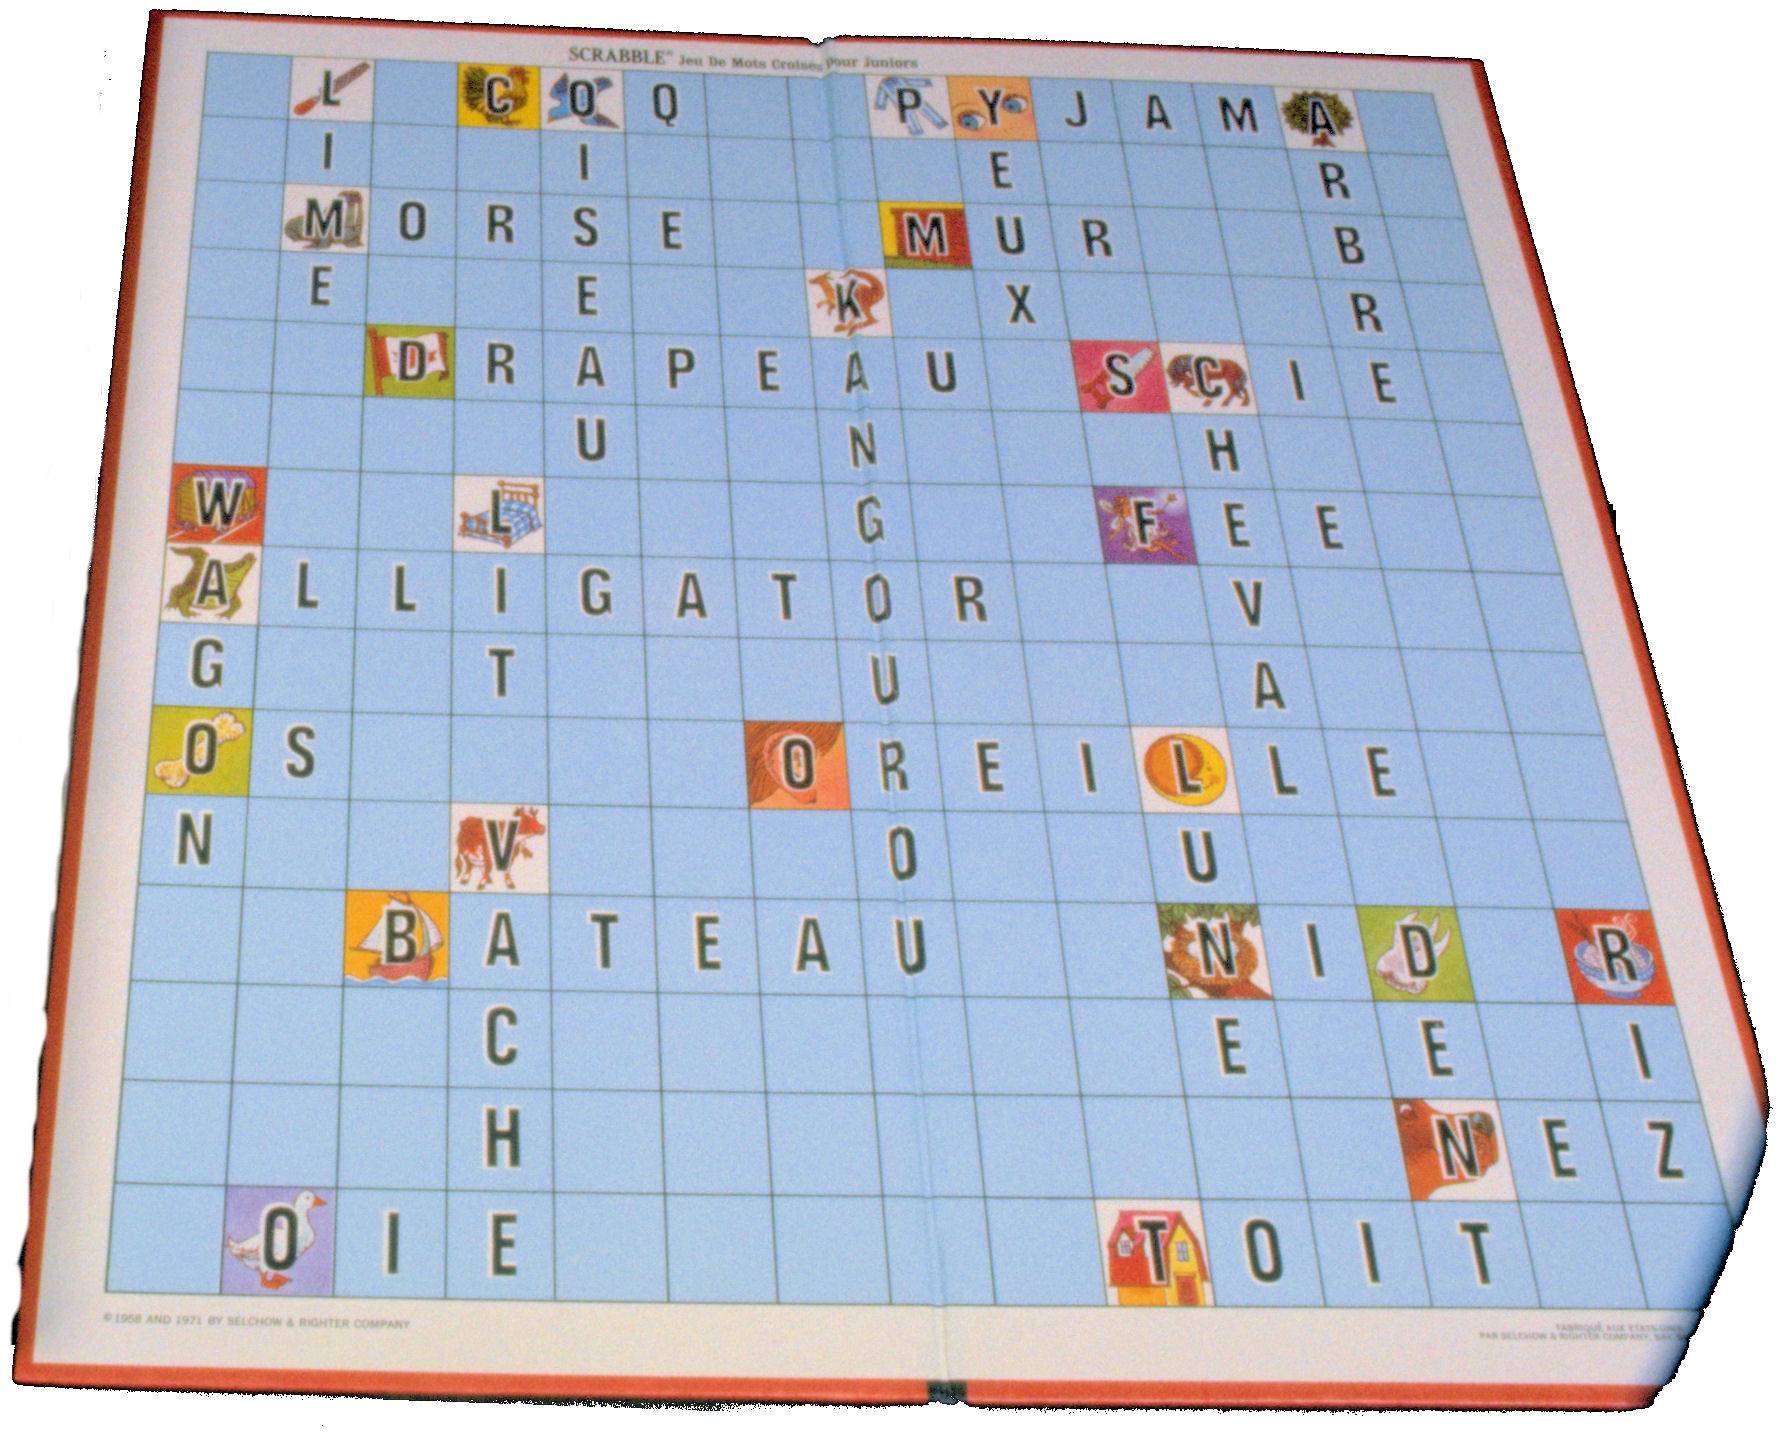 Scrabble (Junior Versions)